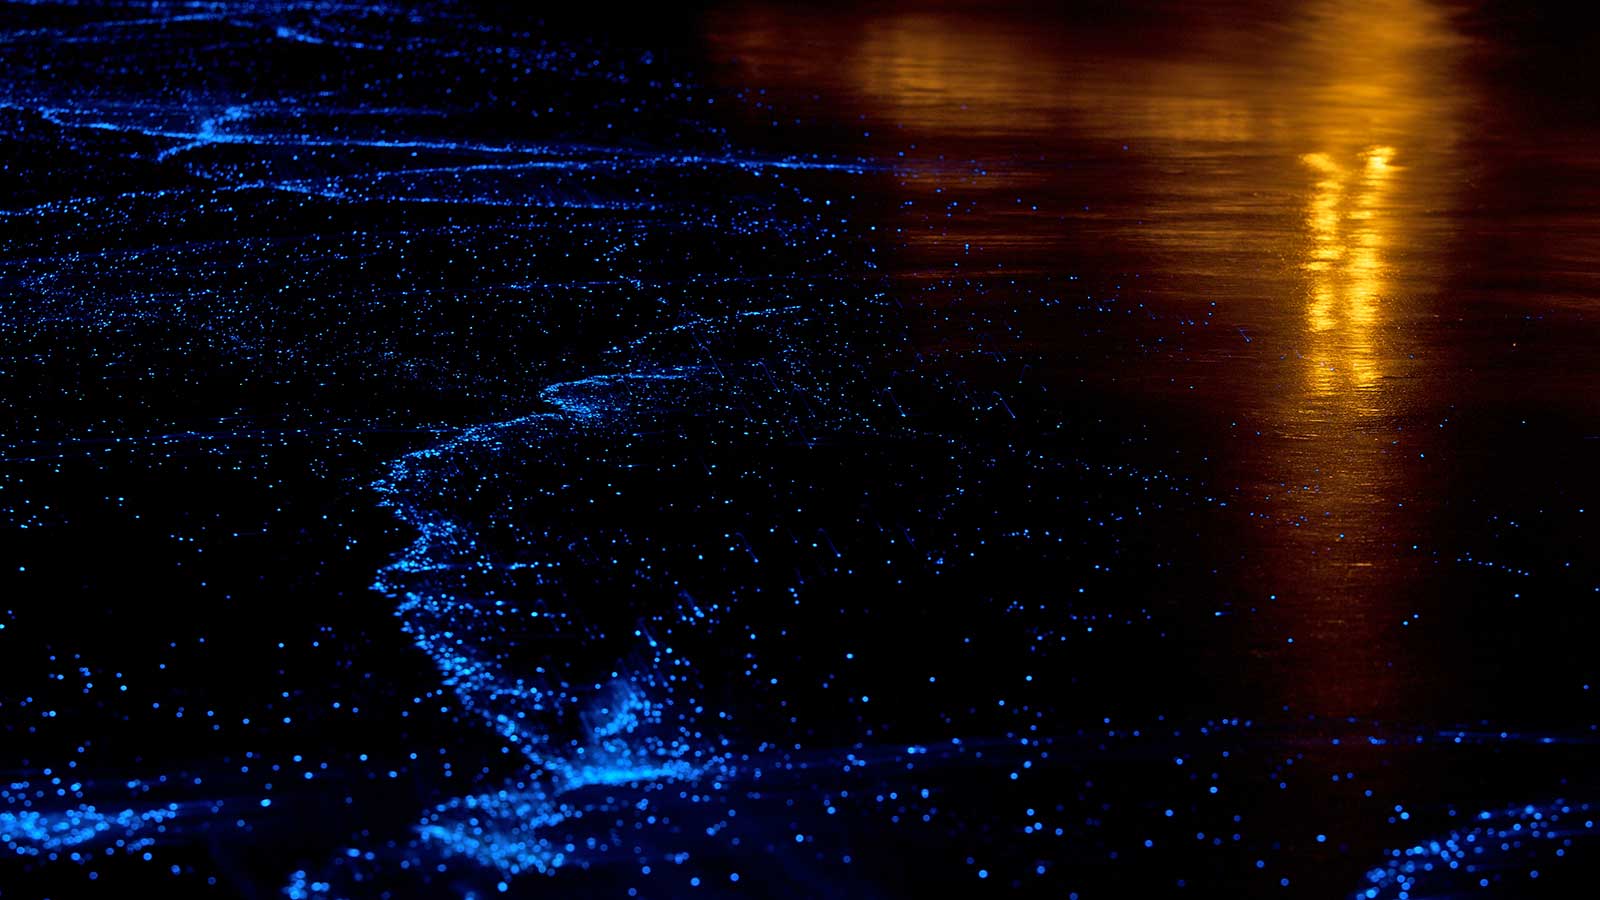 Bioluminescence Wallpapers